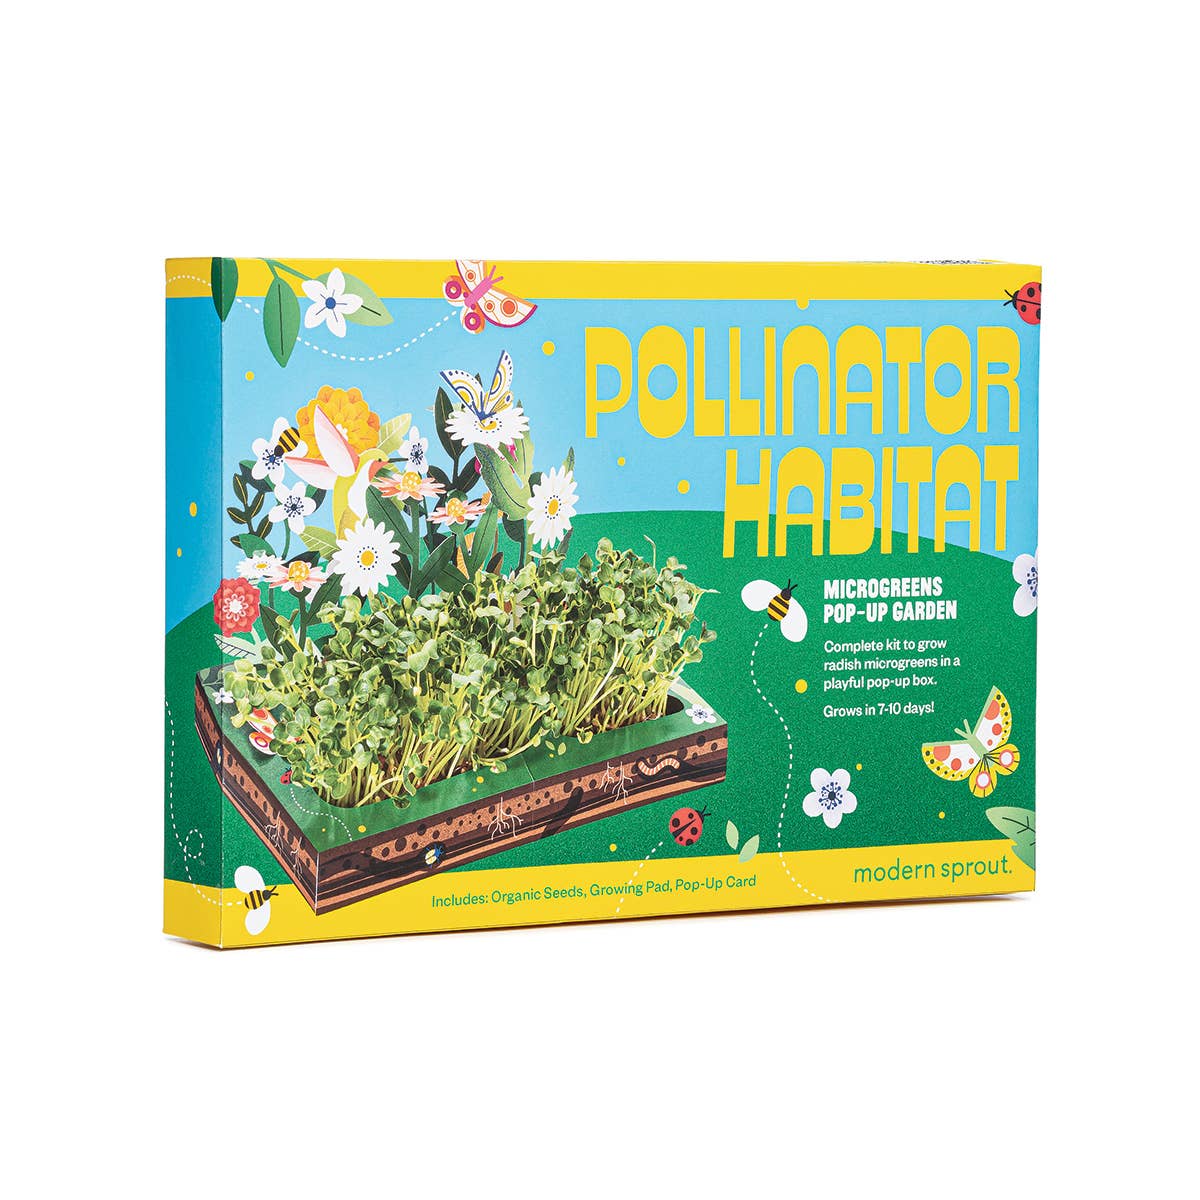 Microgreens - Pollinator